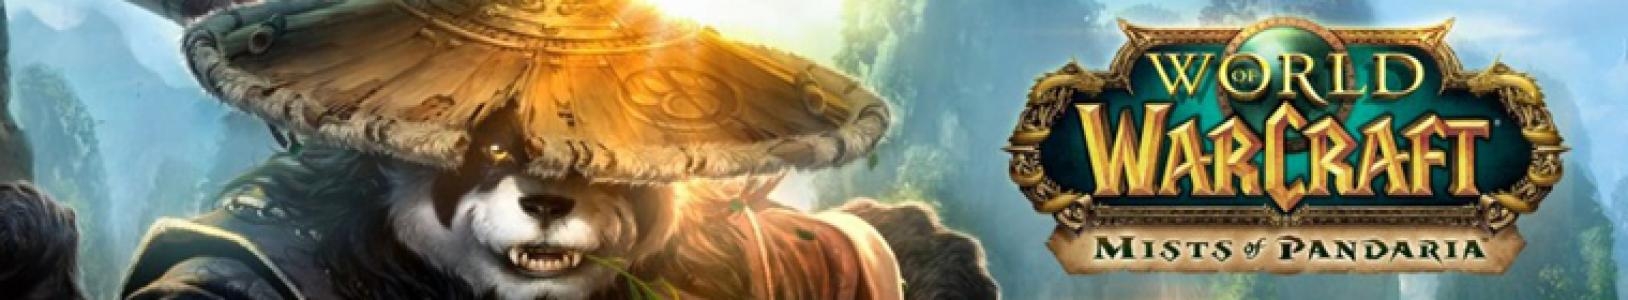 World of Warcraft: Mists of Pandaria banner